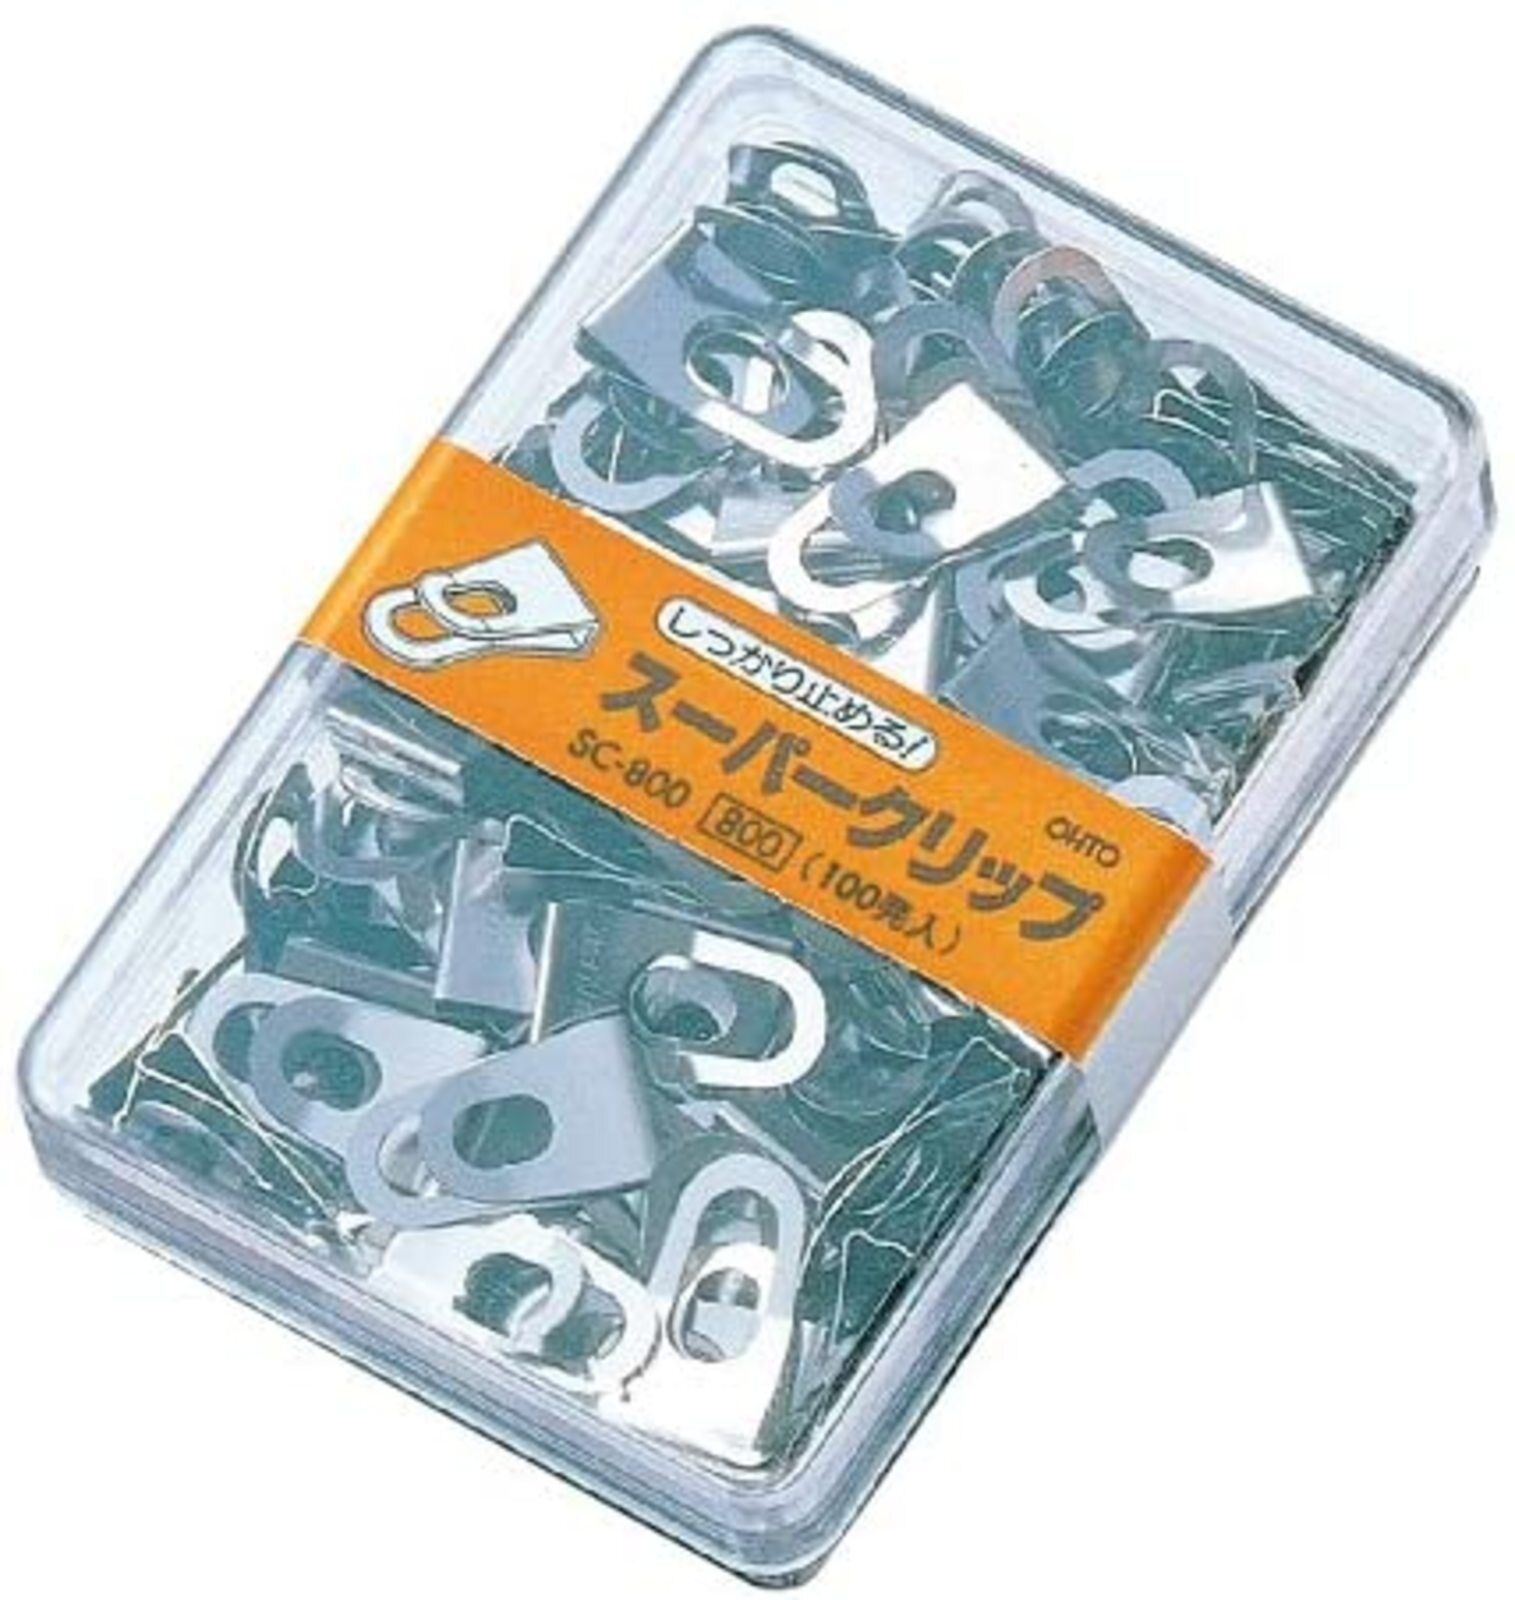 OHTO-stationery-clip Super clip SC-800 (100pcs) New from Japan